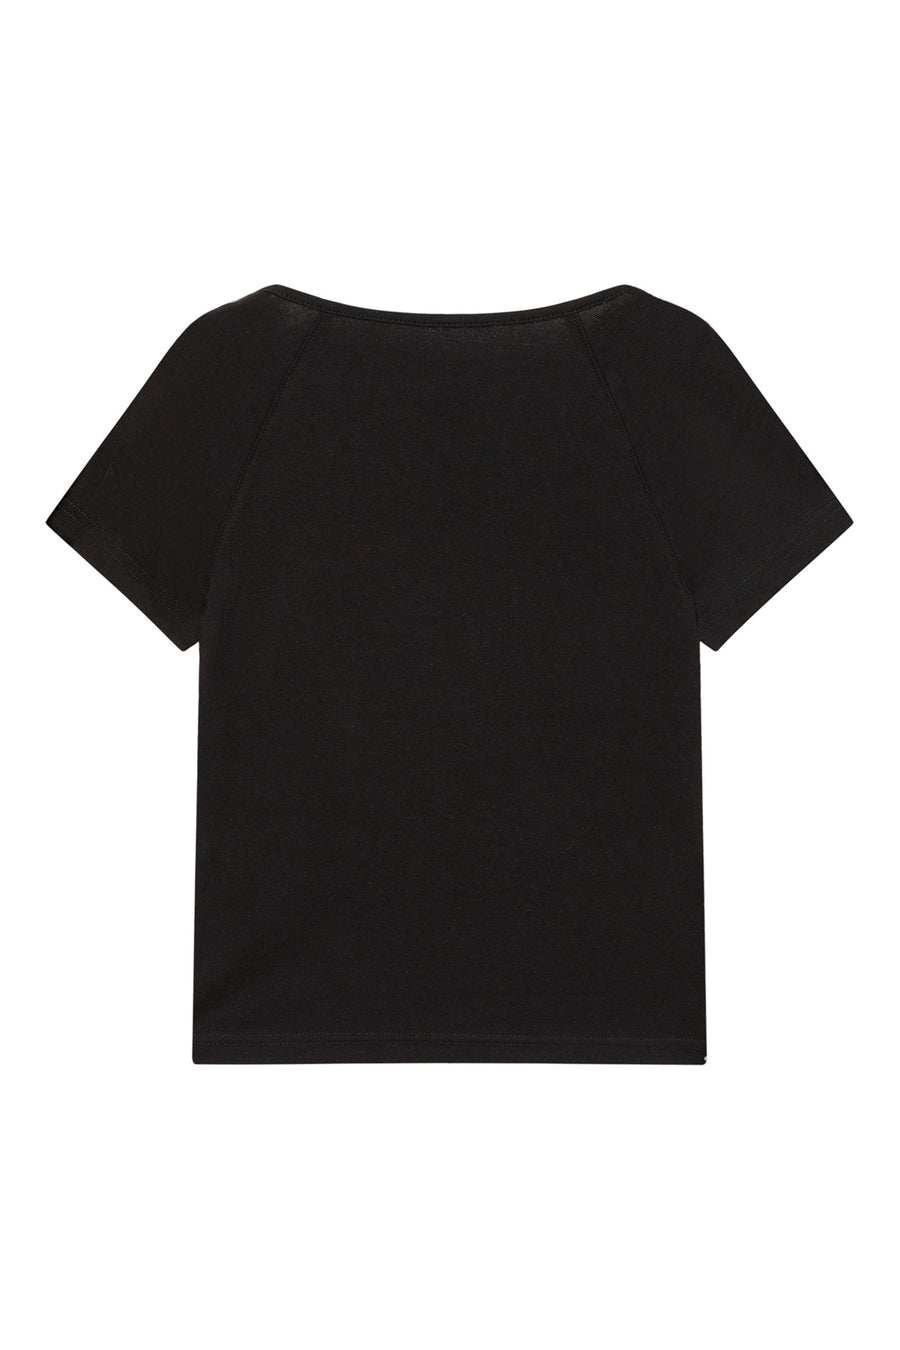 CHUU Slim Square Neck T-Shirt